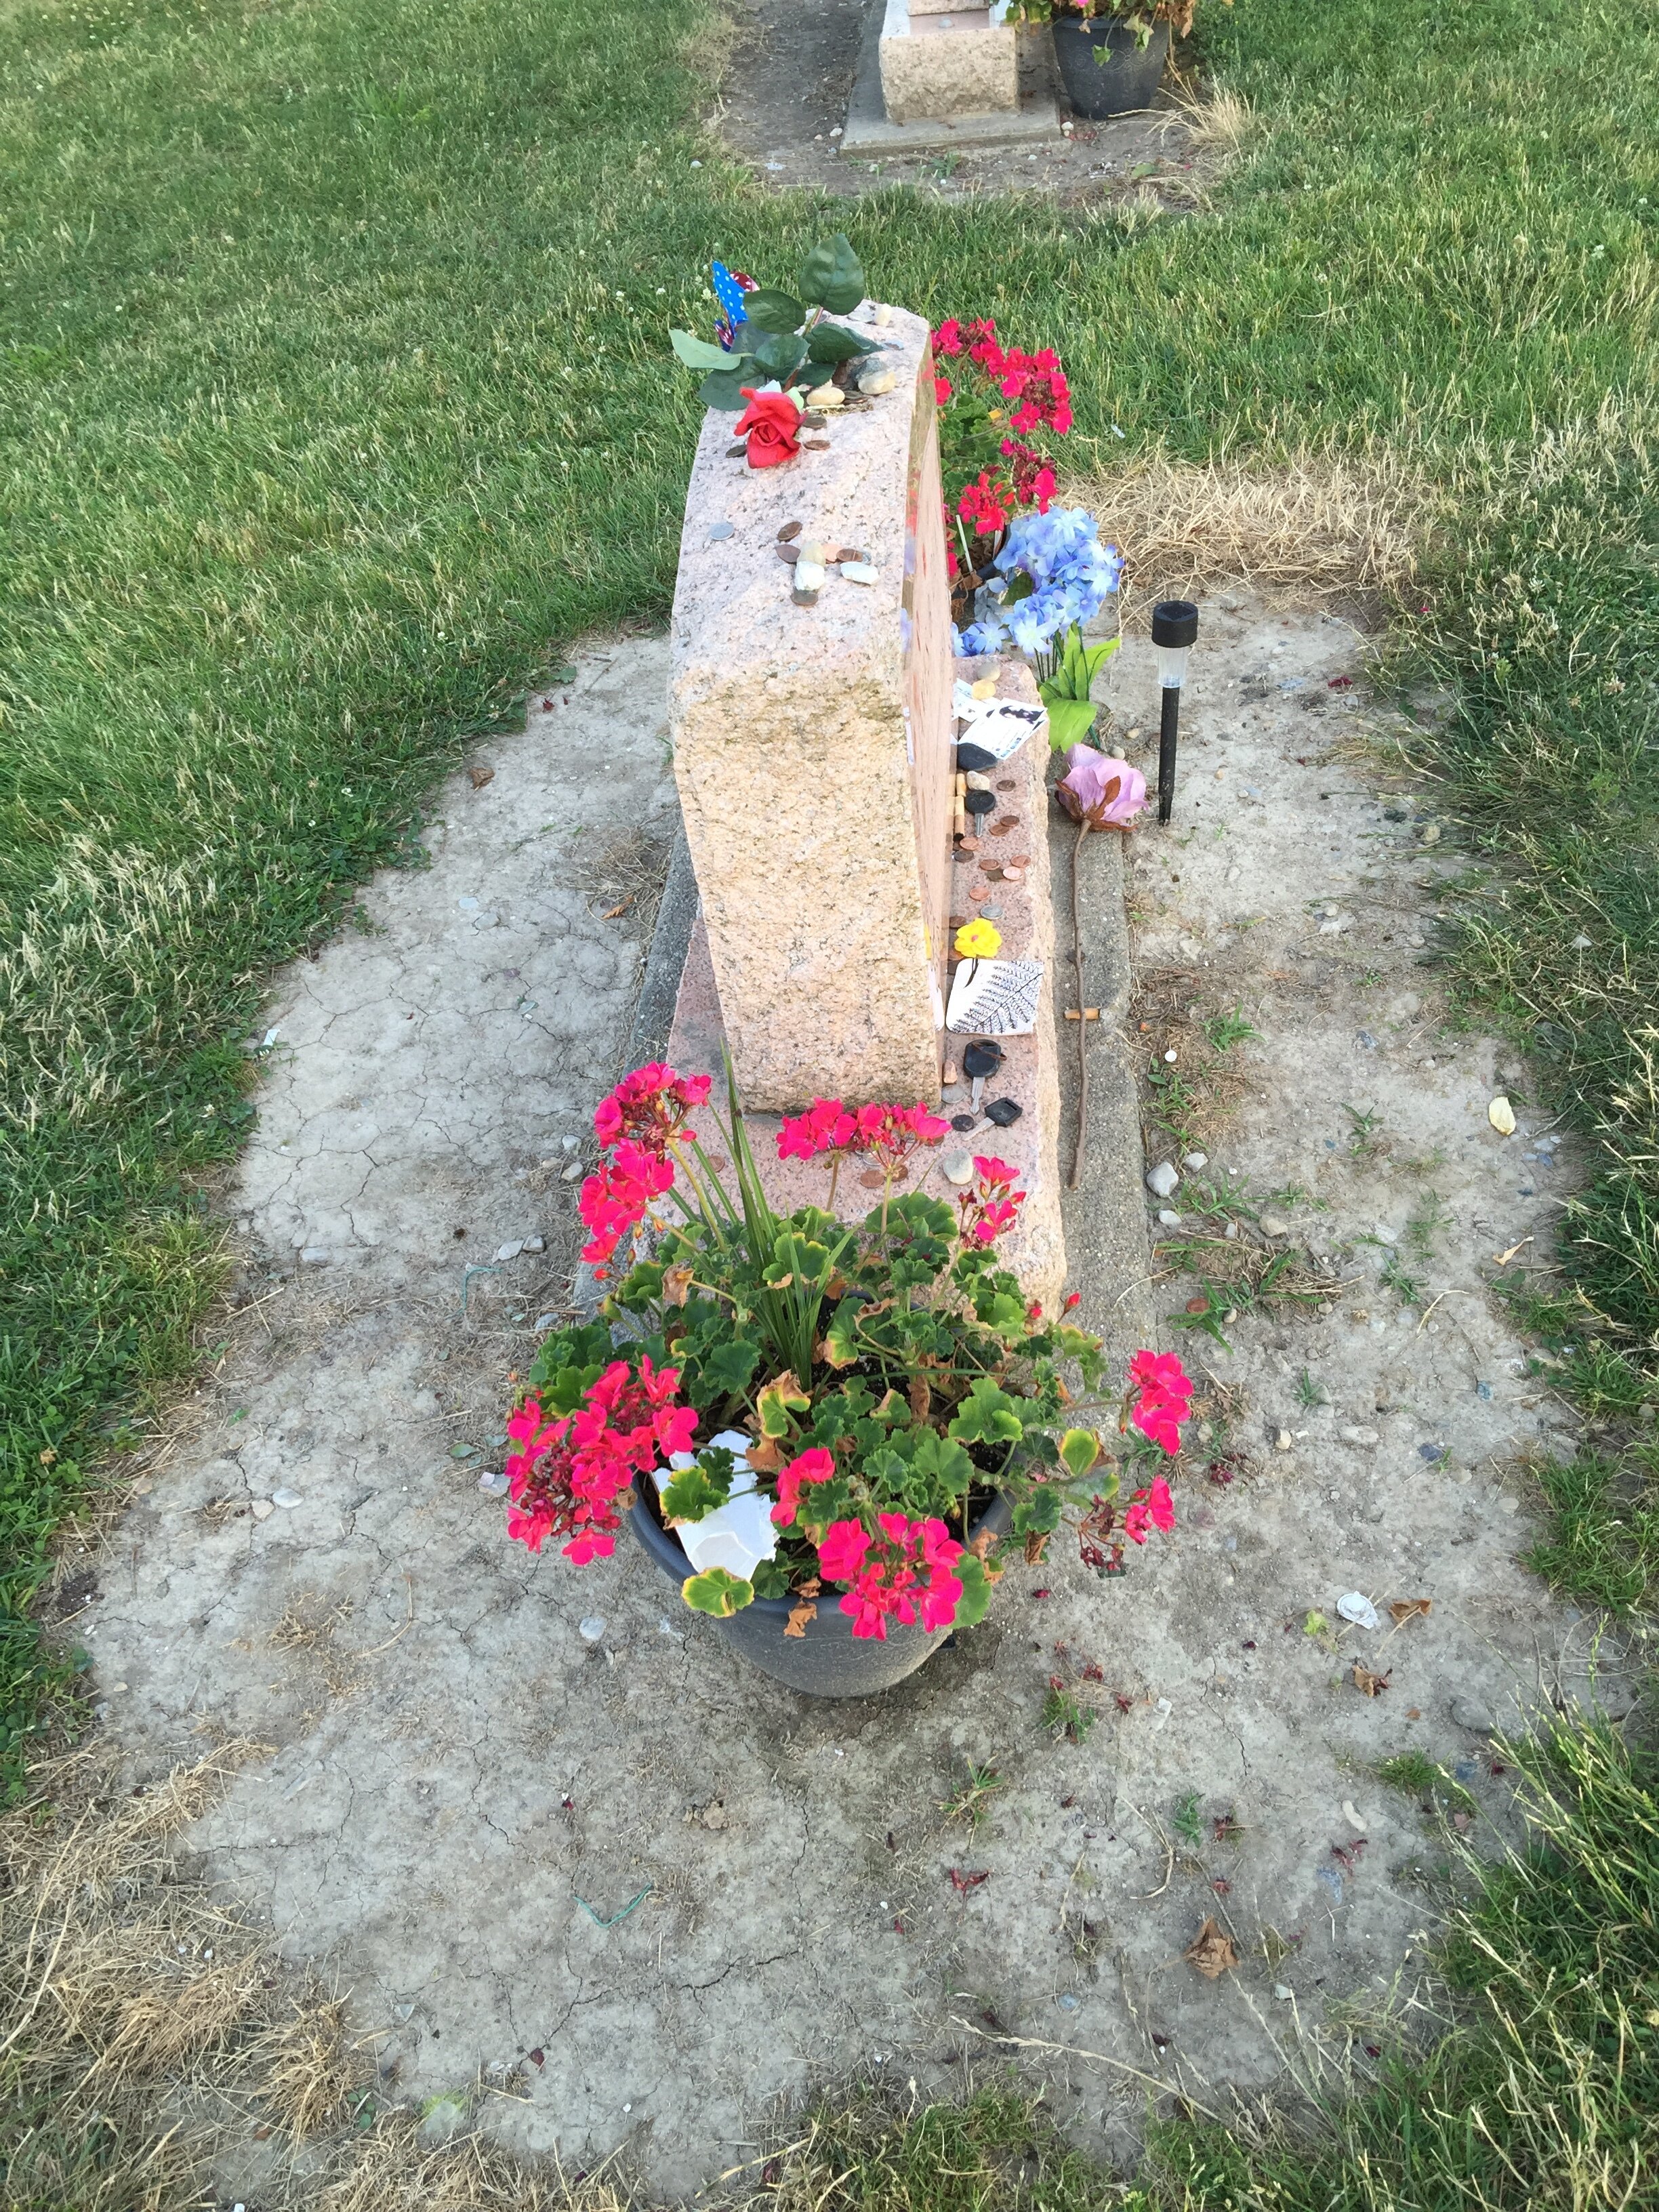  James Dean’s headstone, ©2016 Jill and Roger Pingleton 